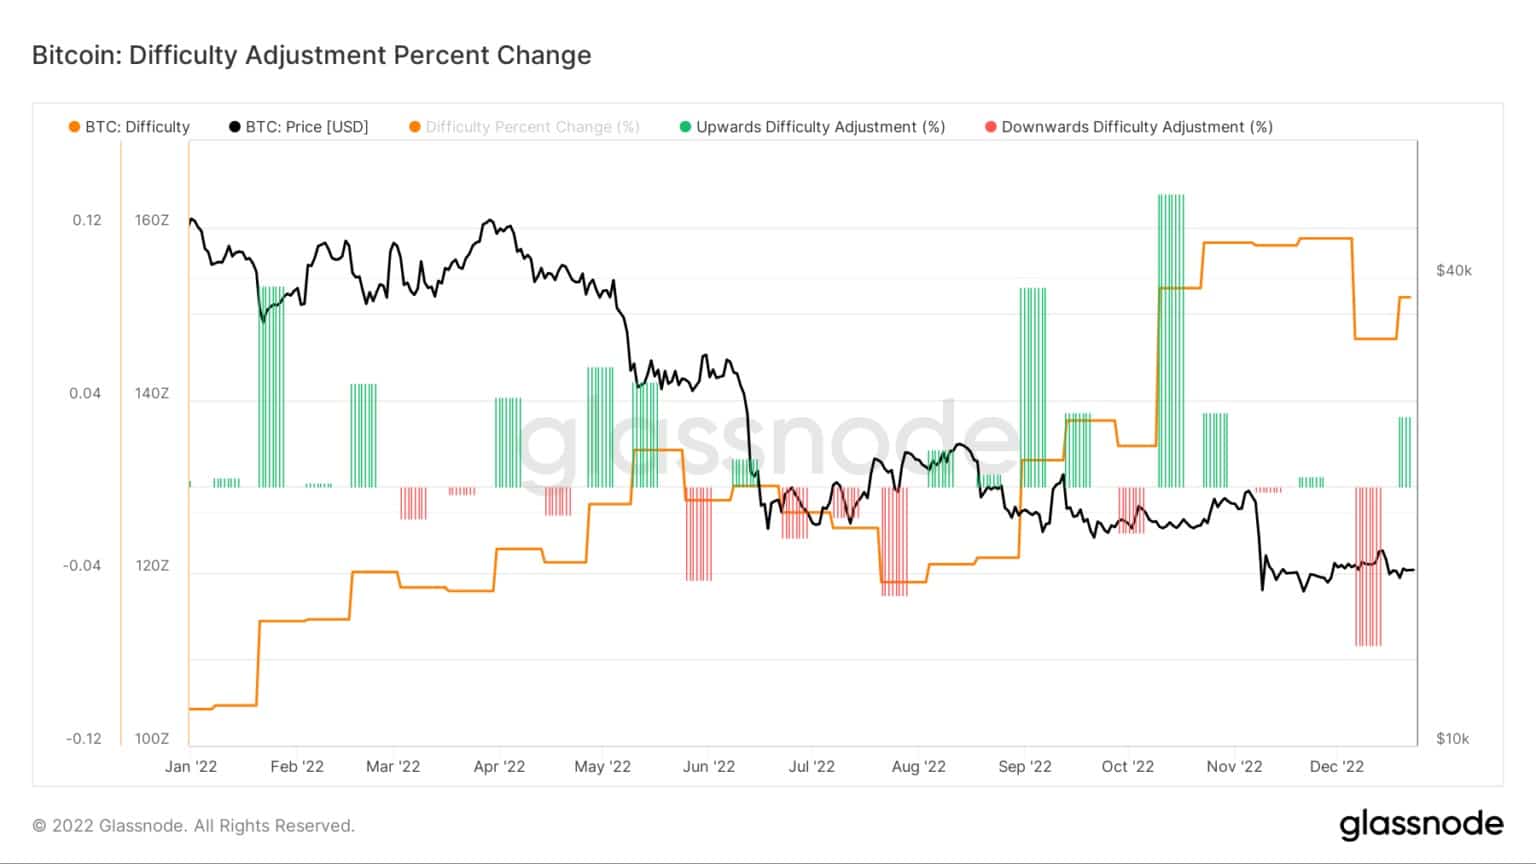 Bitcoin difficulty adjustment percent change (Source : Glassnode)